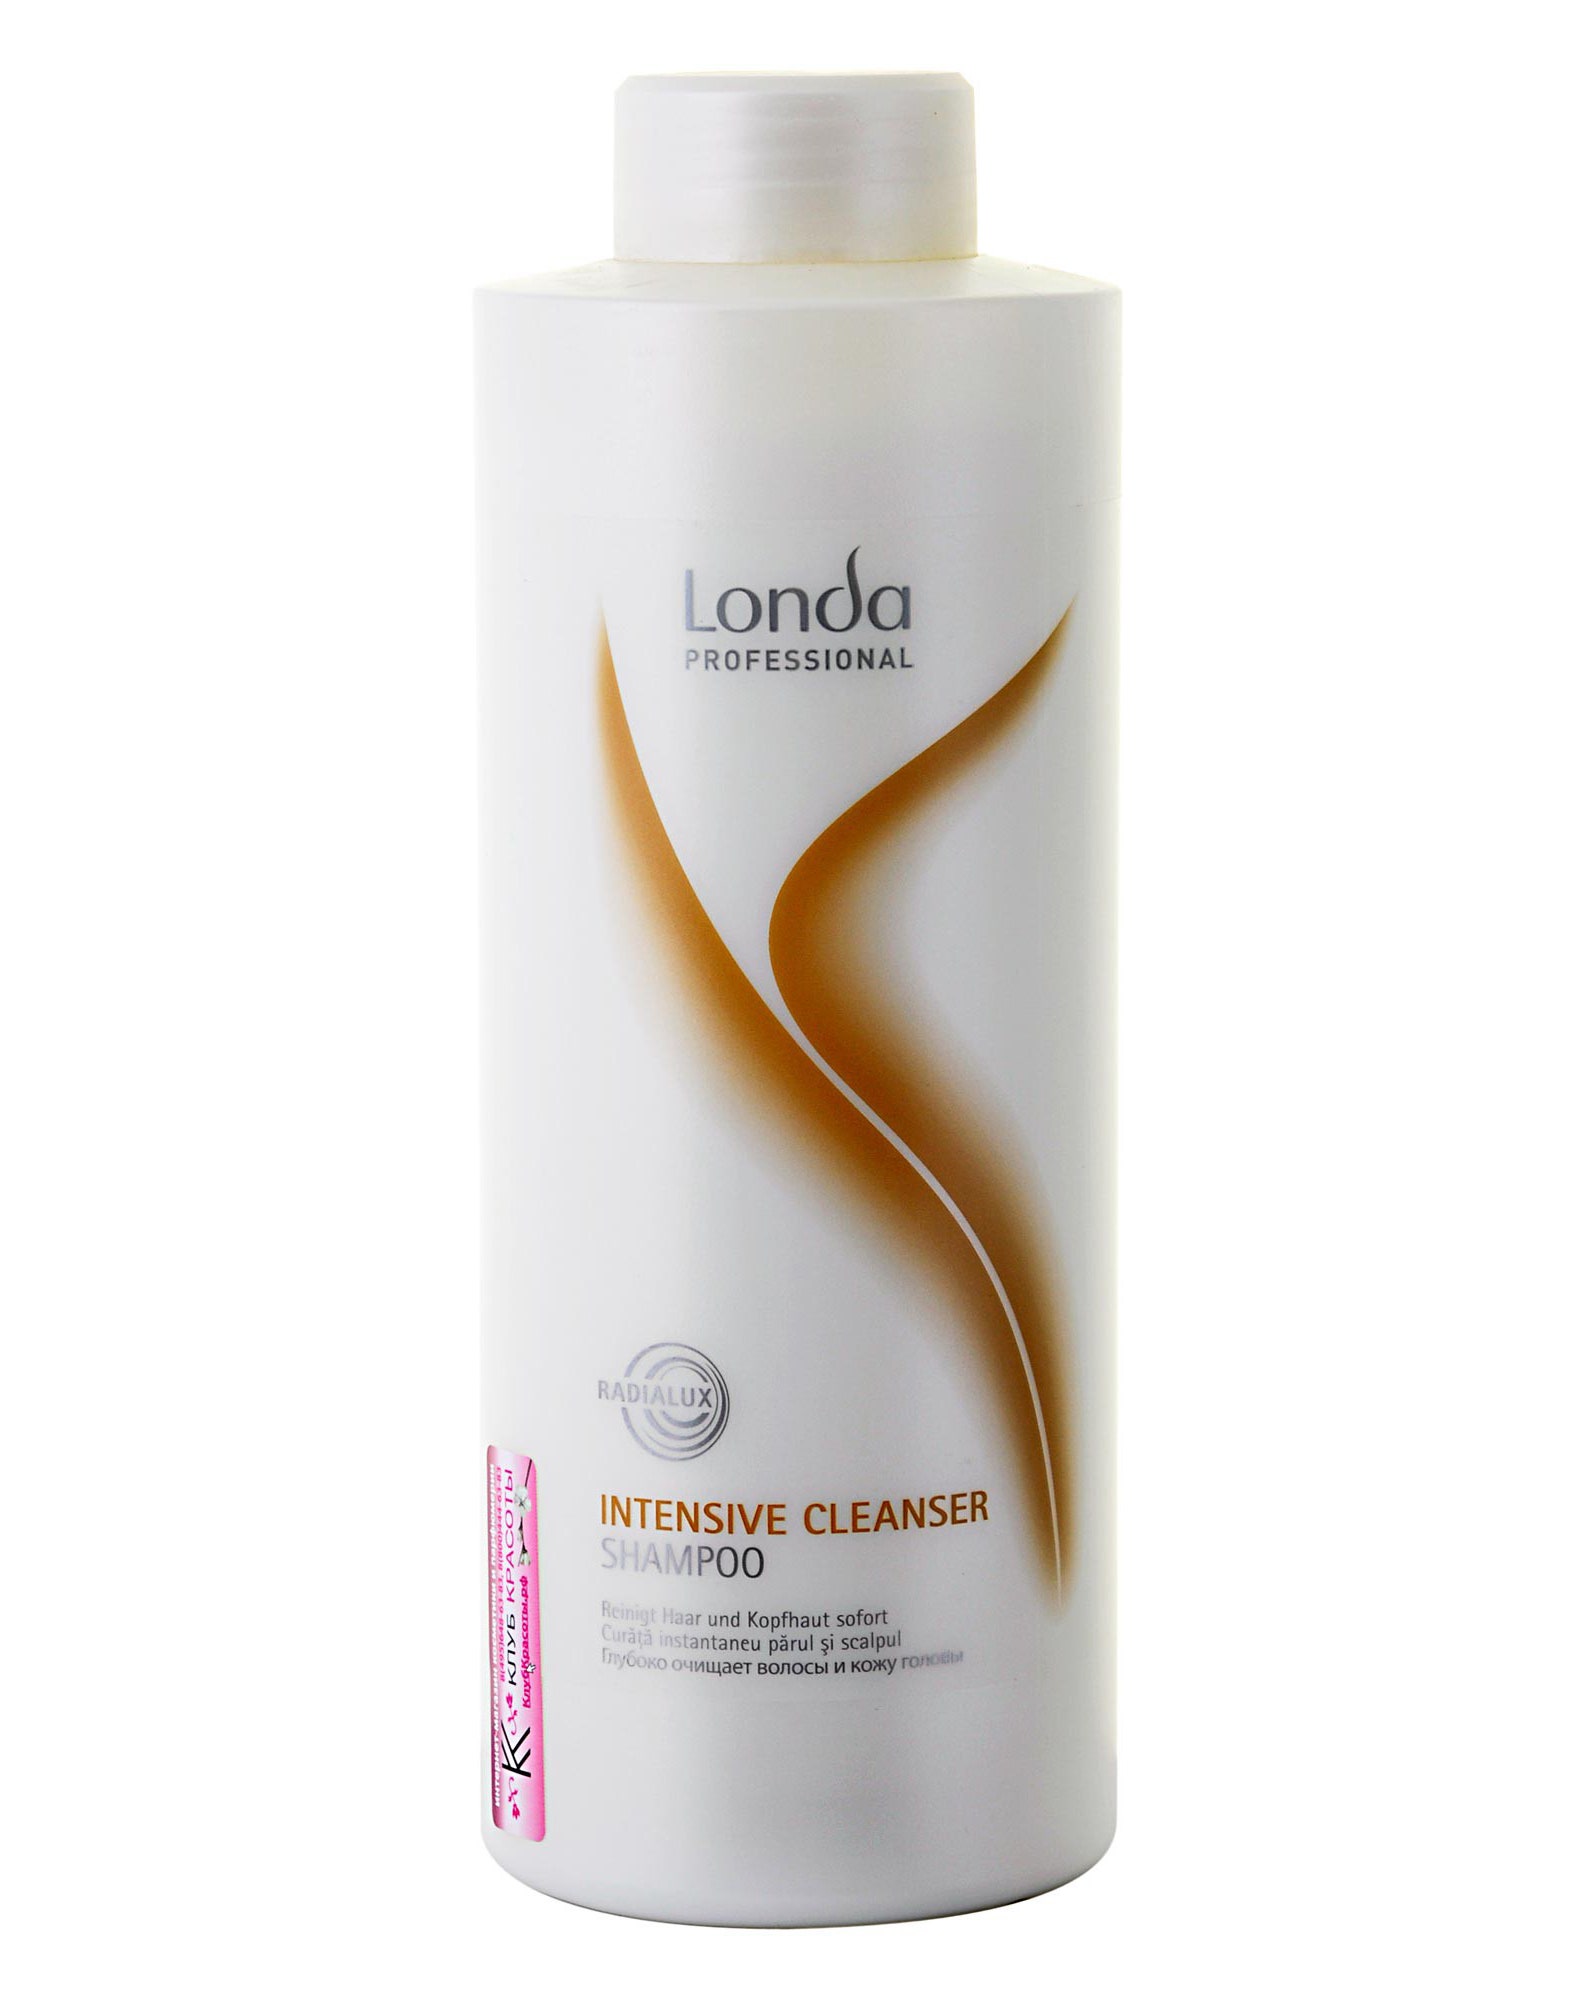 Лучшие очищающие шампуни Natura Siberica Shiseido Londa Professional Moroccanoil | Allure